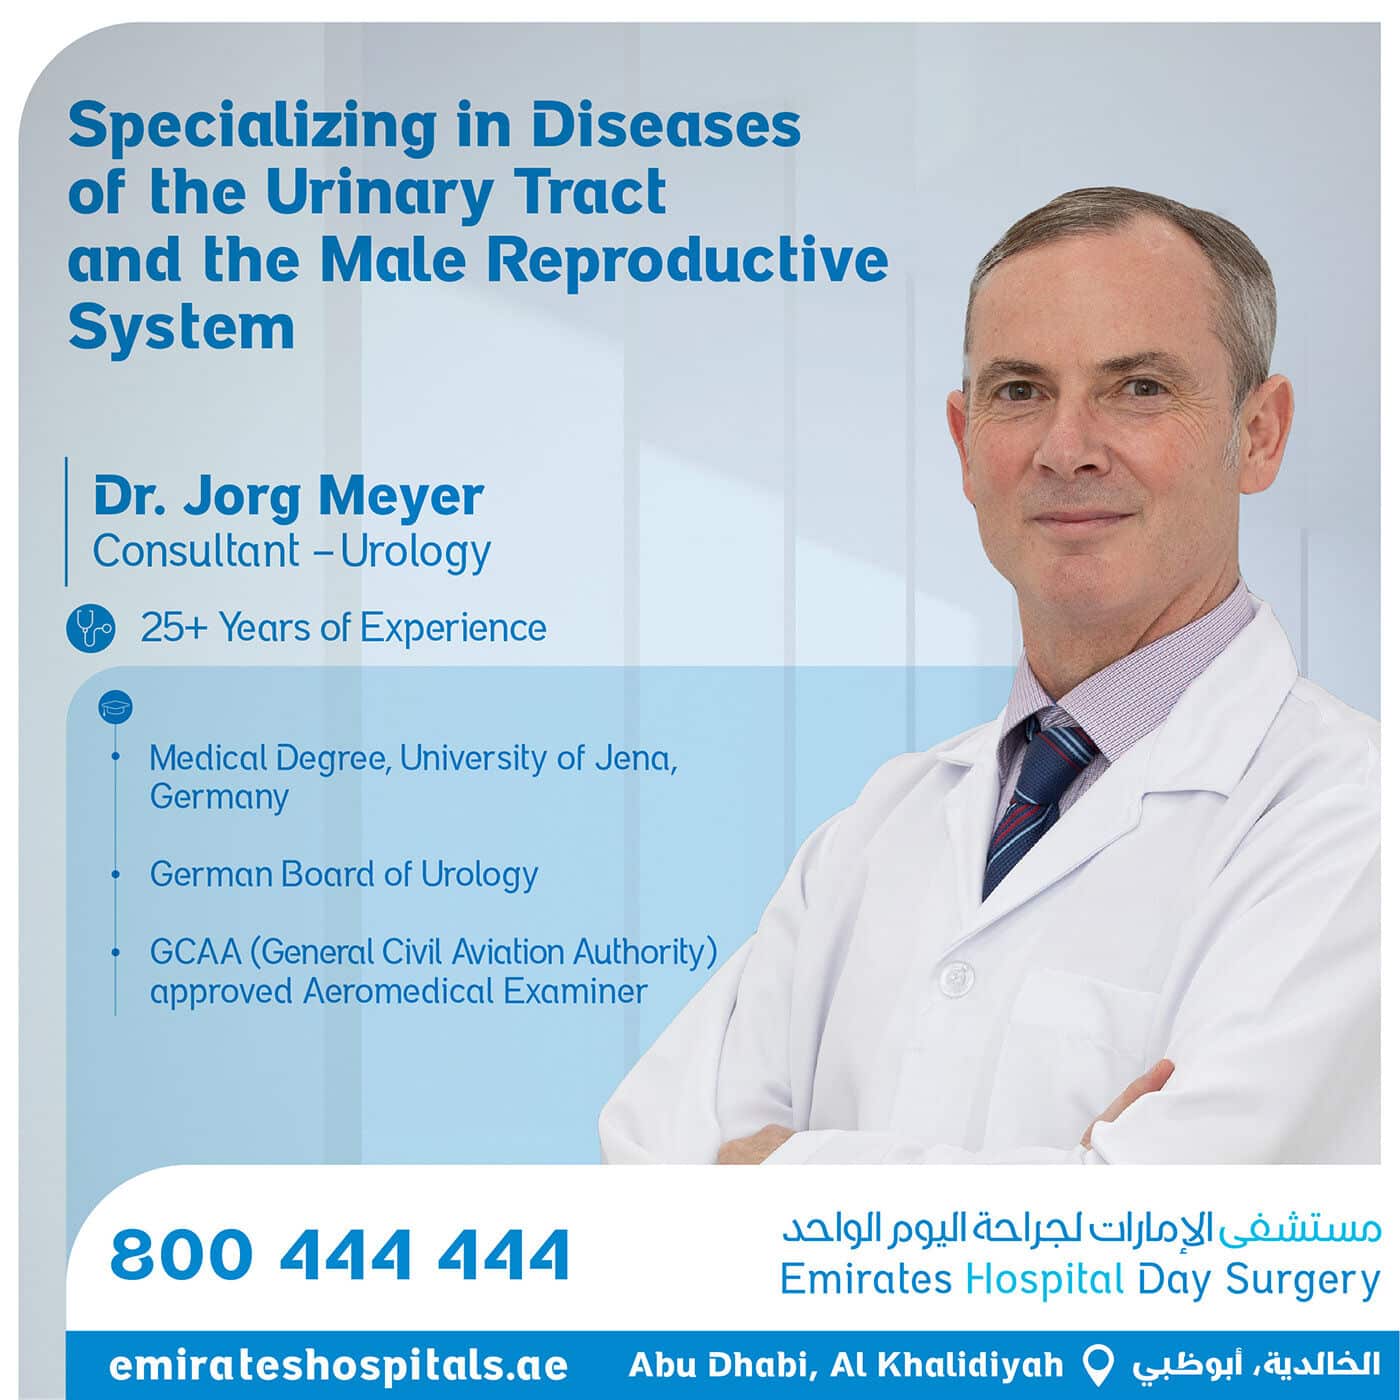 Dr. Jorg Meyer, Consultant – Urology at Emirates Hospital Day Surgery, Abu Dhabi